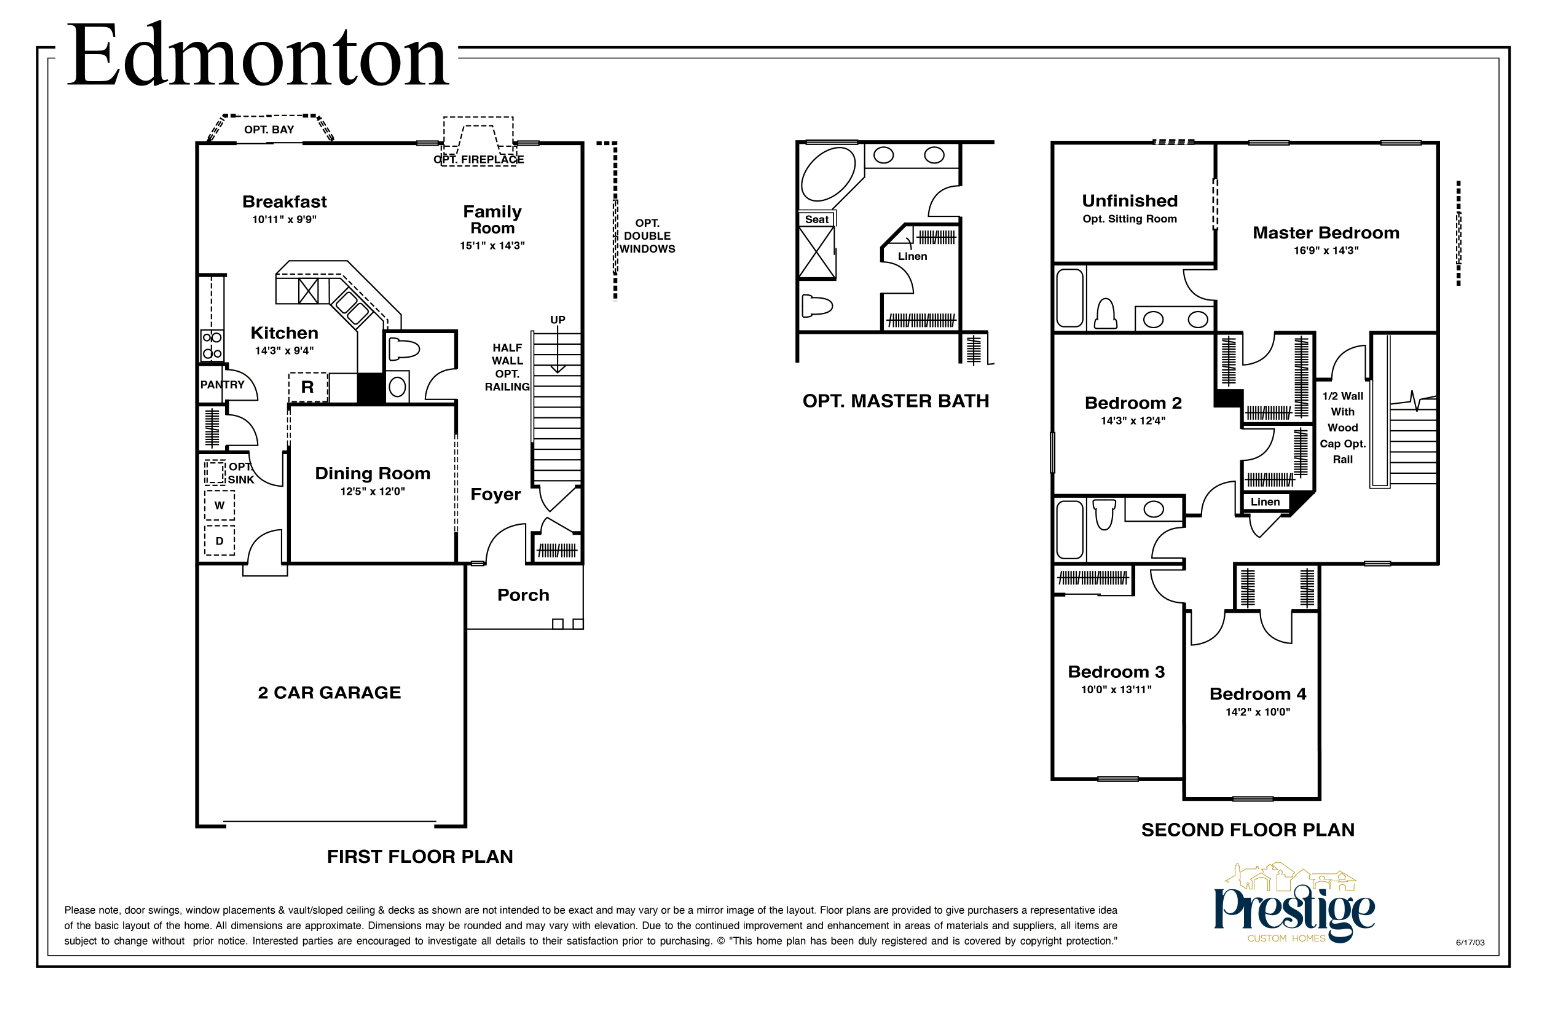 edmonton-floor-plan-prestige-custom-homes